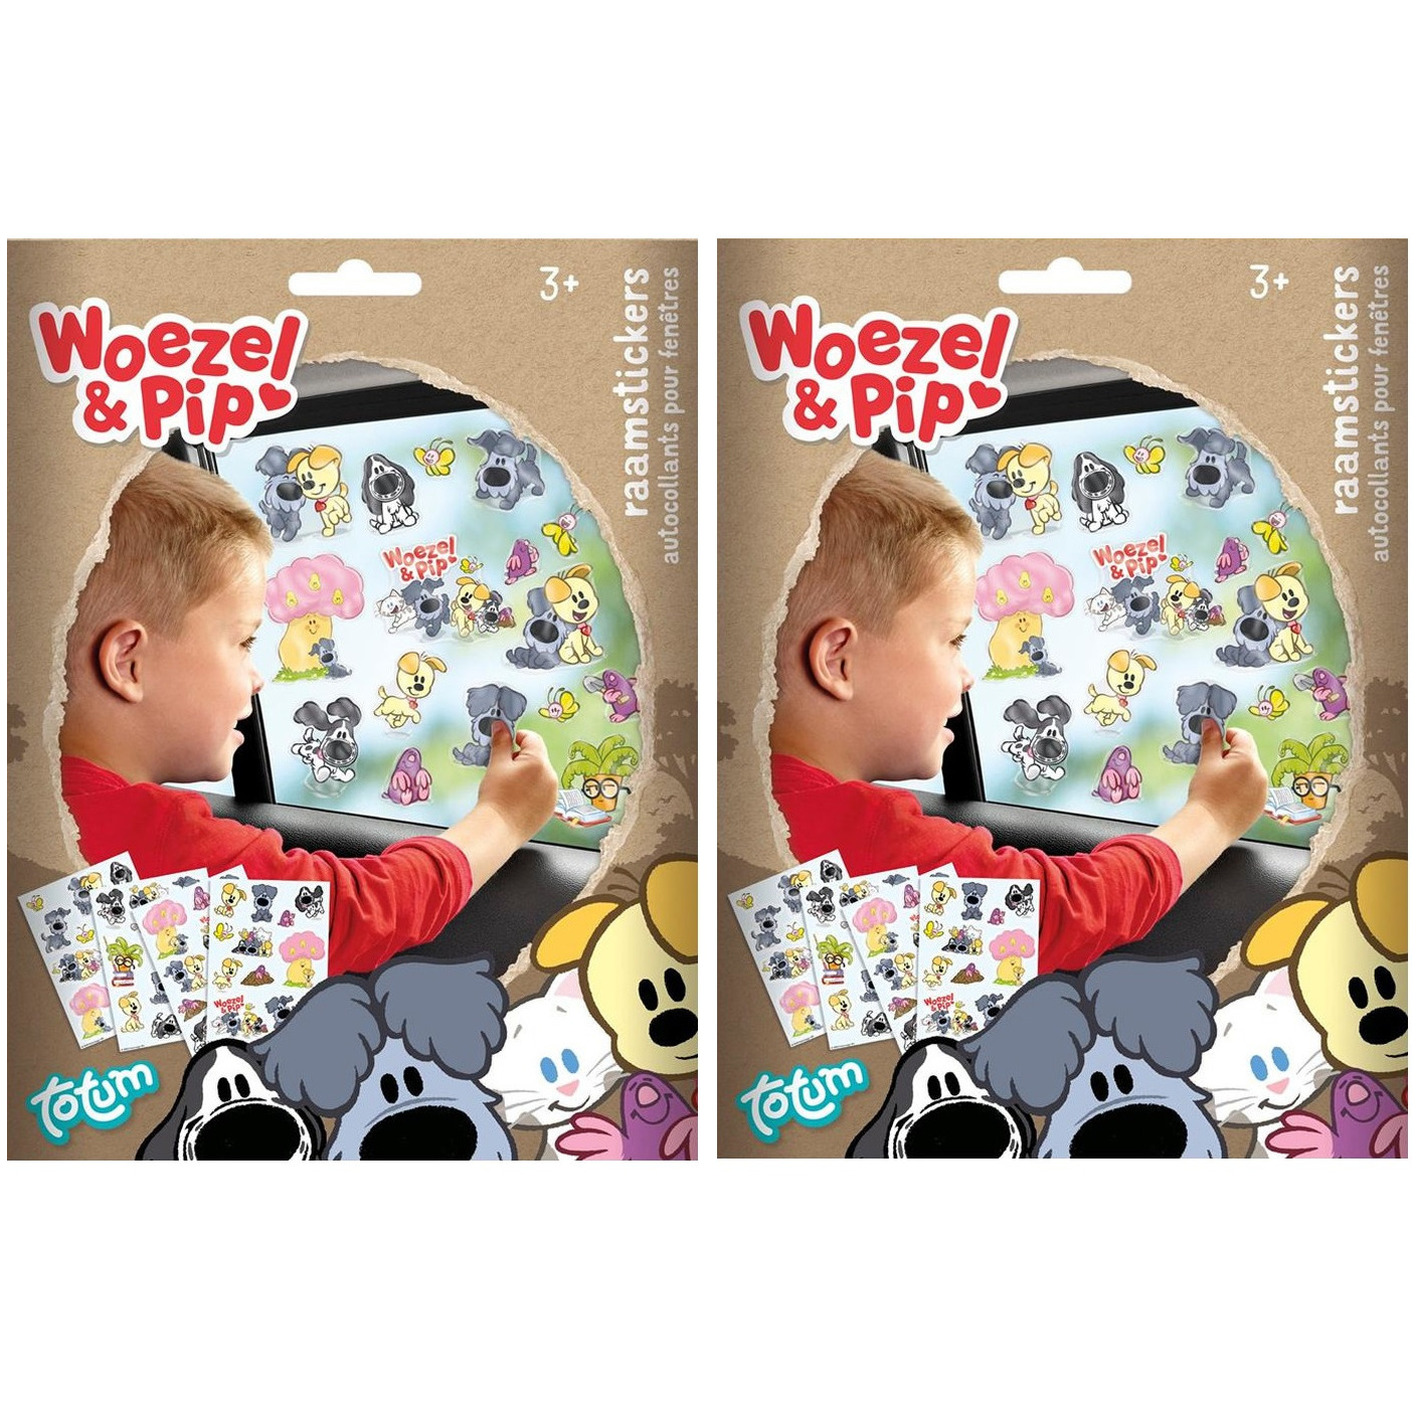 2x pakjes raam-autoraam kinder stickers 70x stuks Woezel en Pip thema